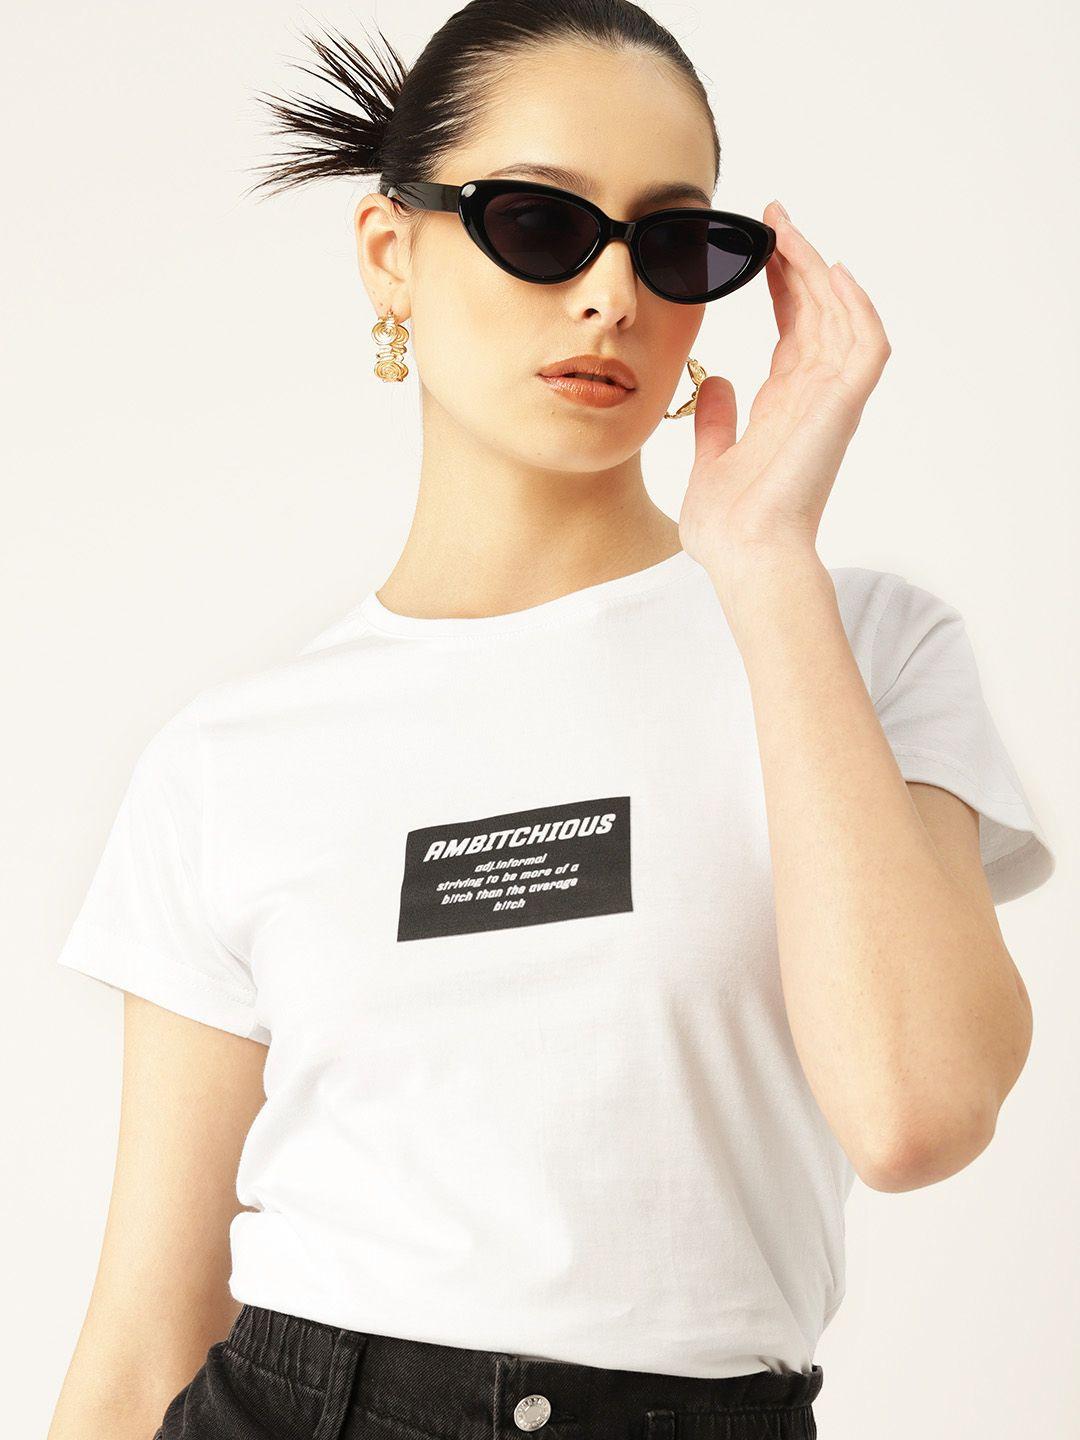 kook n keech women typography printed pure cotton t-shirt